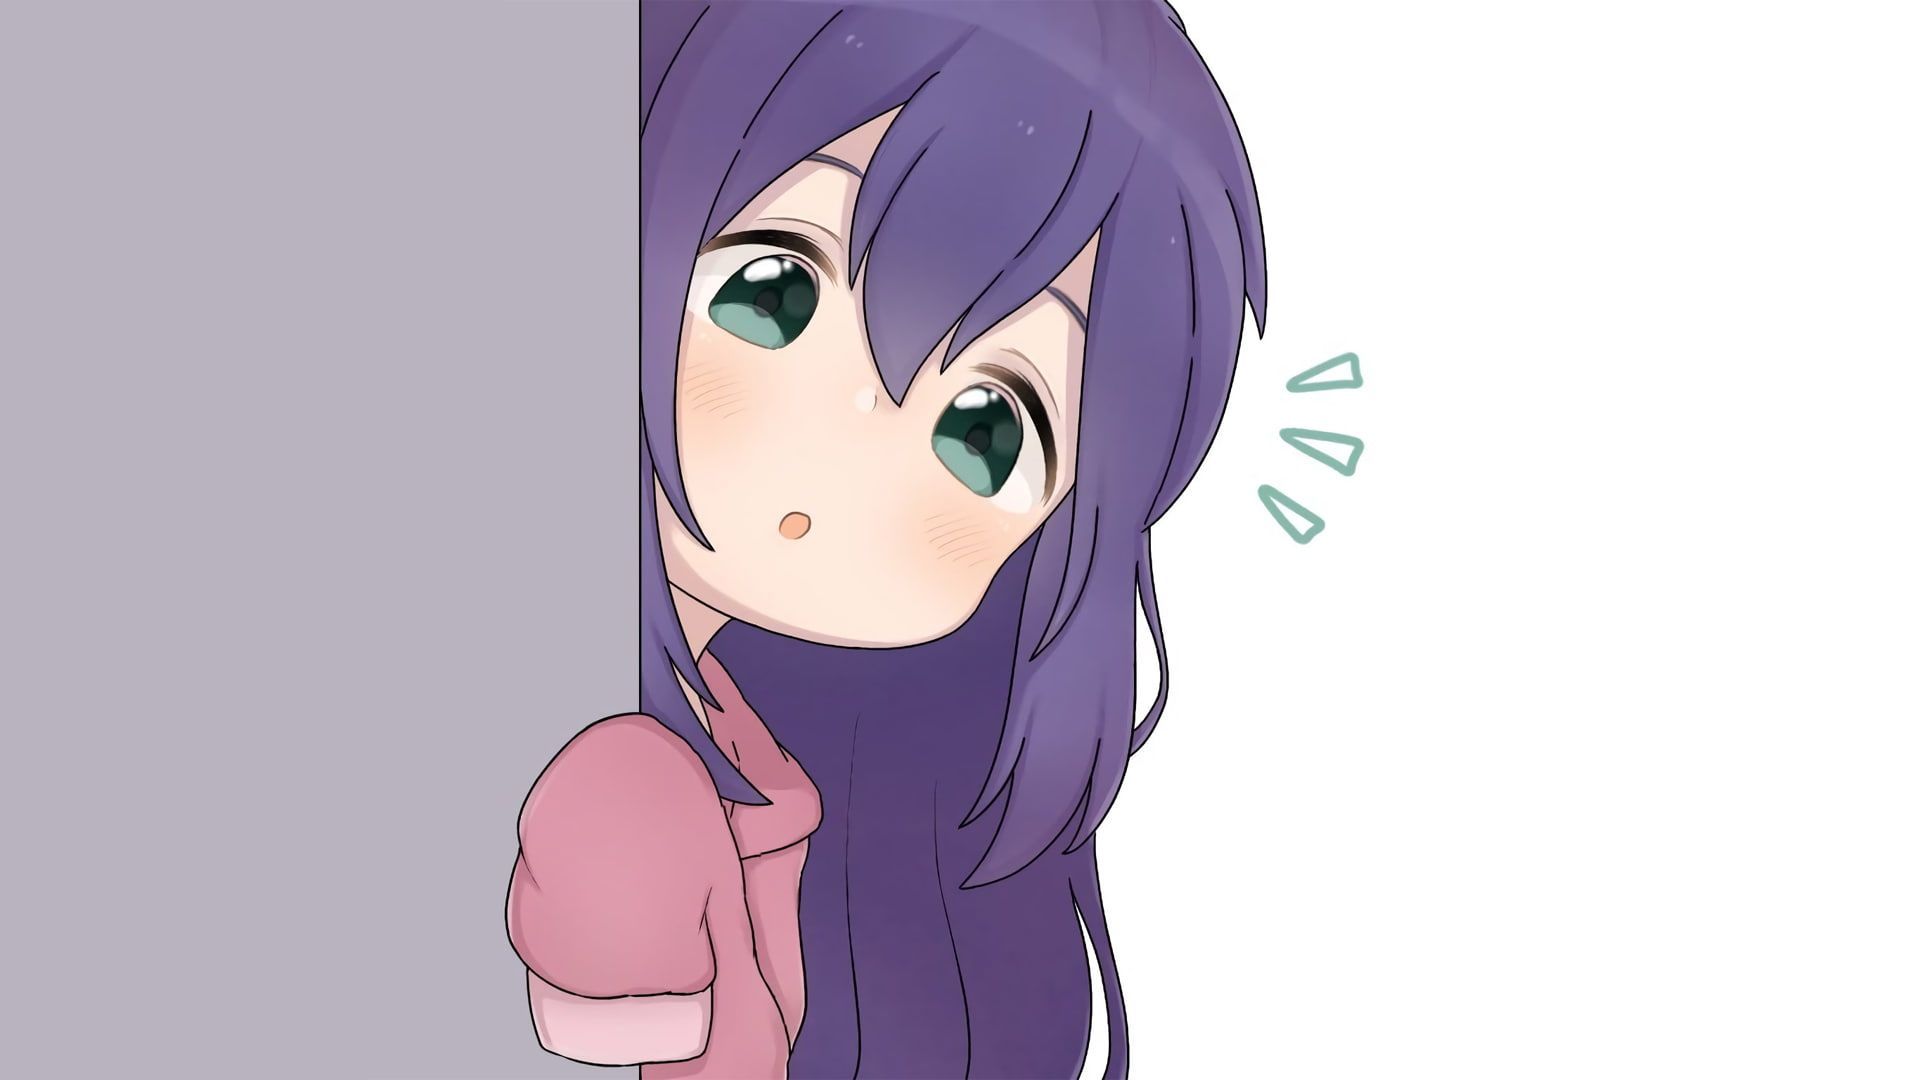 aesthetic anime girl with purple hair